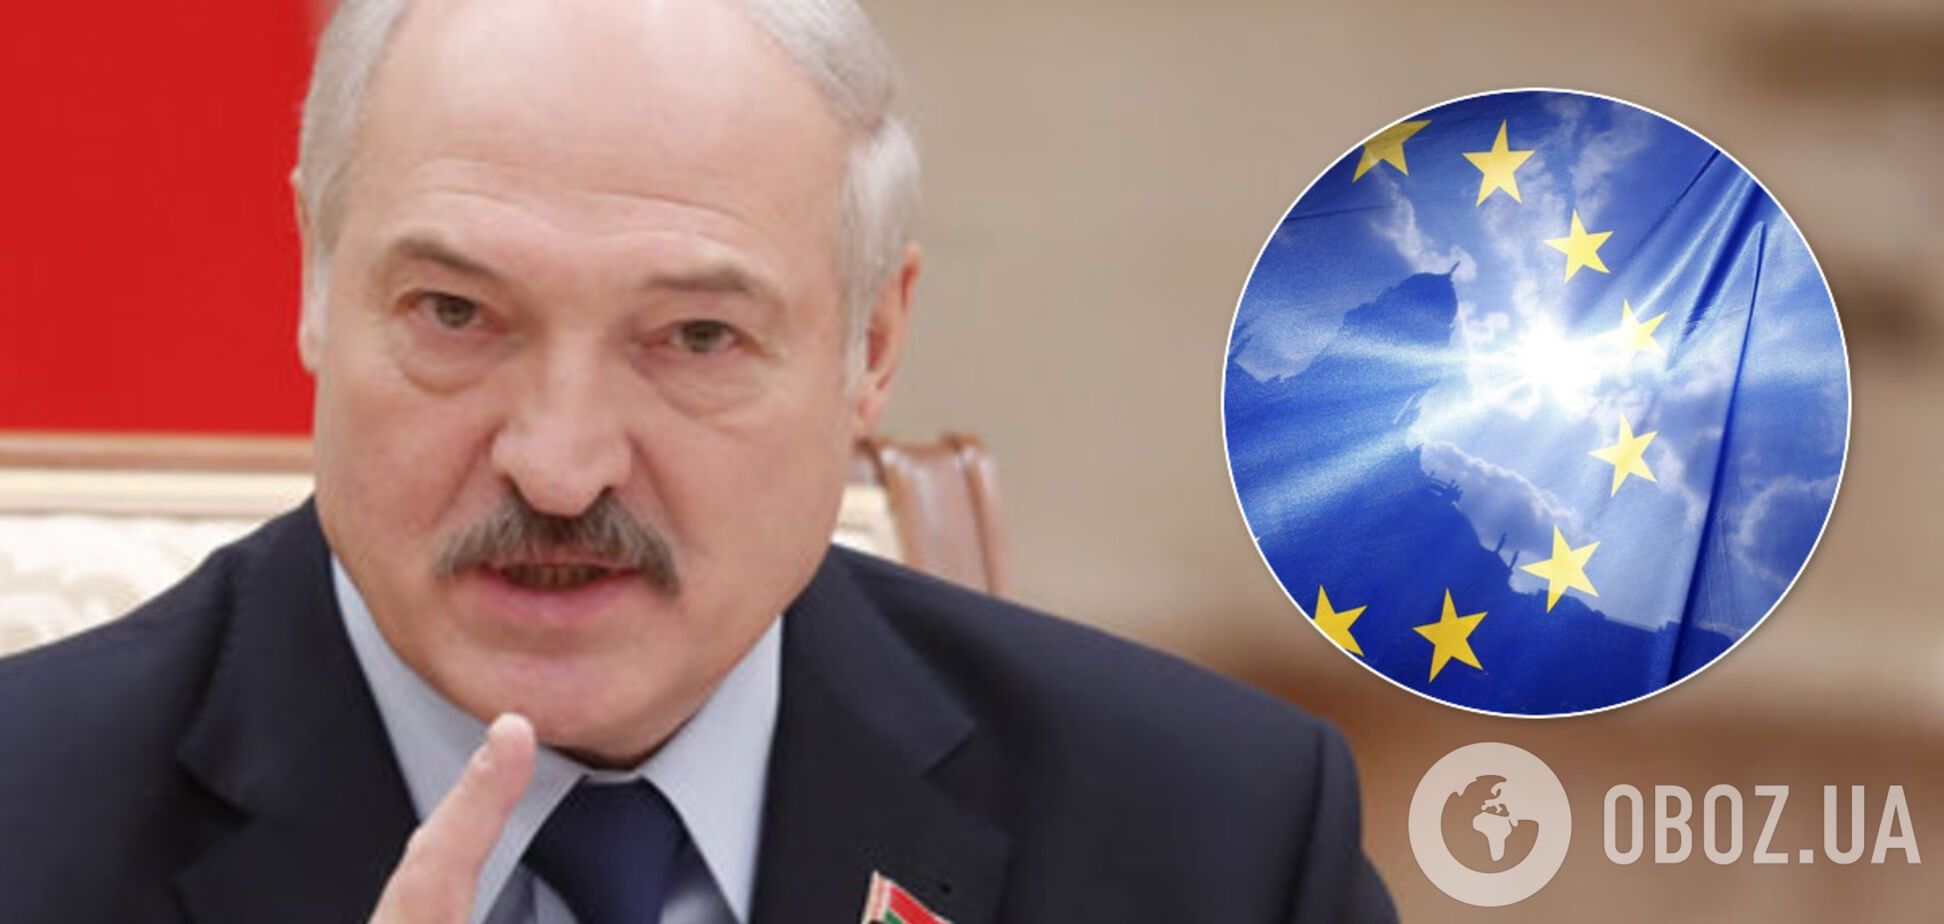 ЕС ударил санкциями по Беларуси: появилась официальная реакция Минска